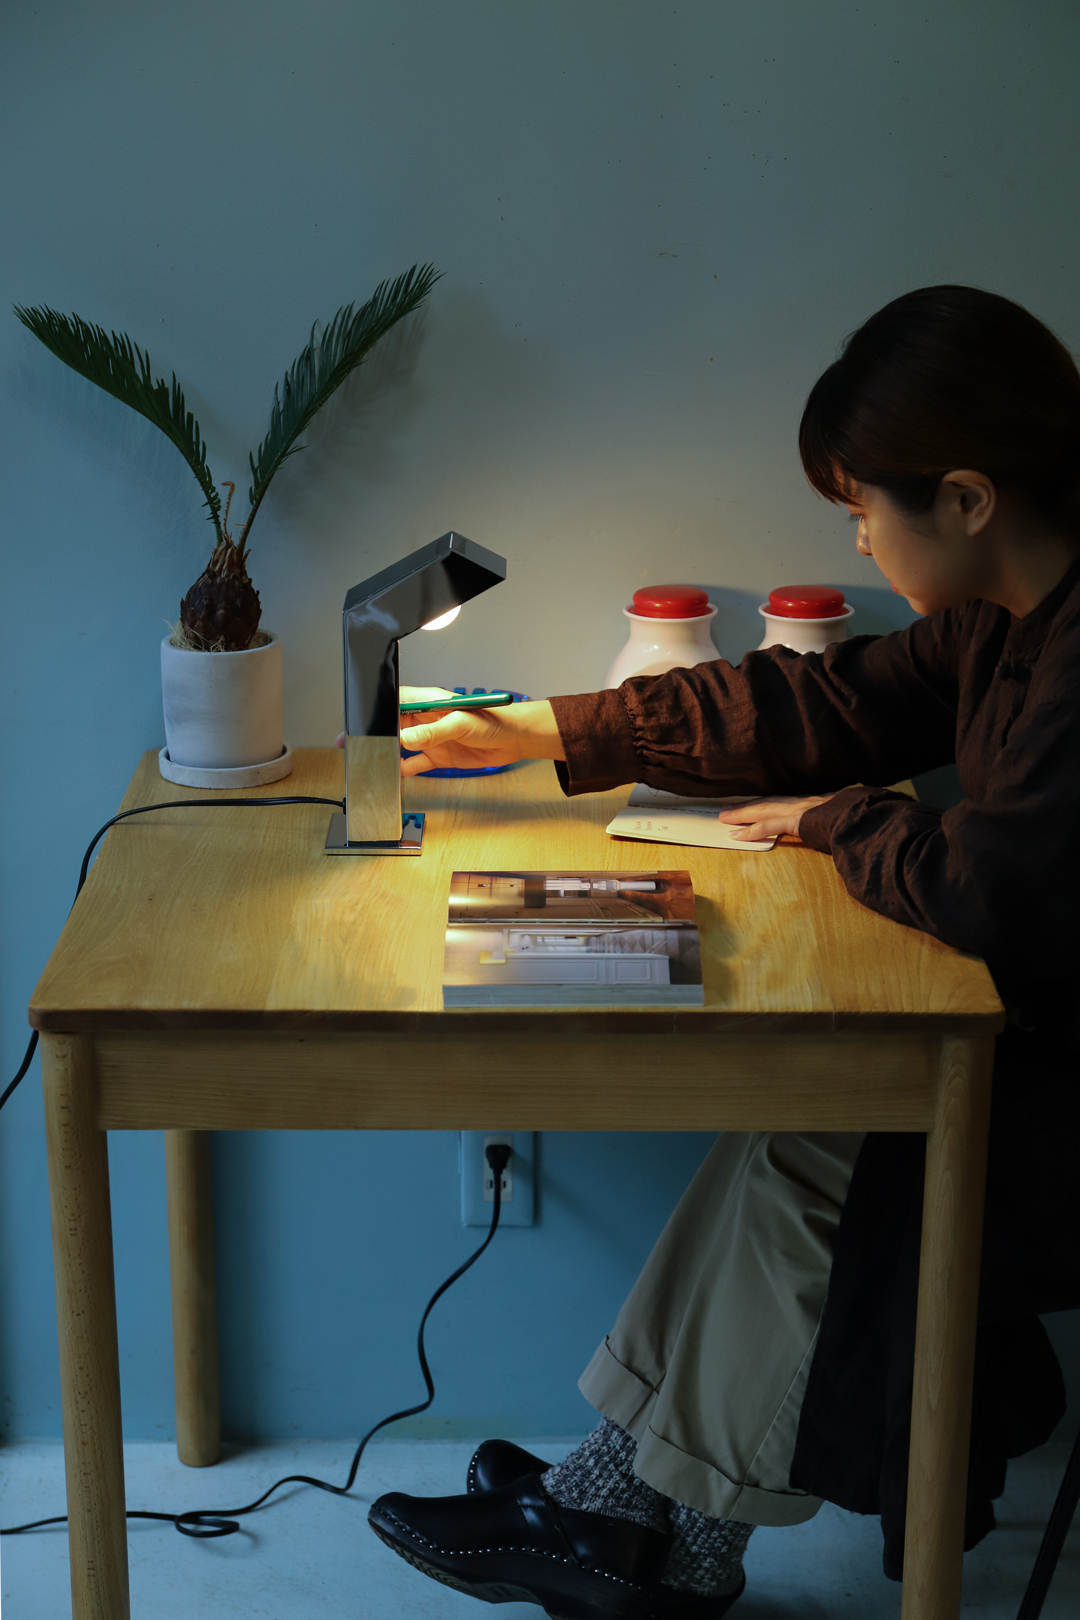 Vintage Desk Lamp Italian Modern Design/ヴィンテージ デスクランプ イタリアンモダン ポストモダン 間接照明 インテリア